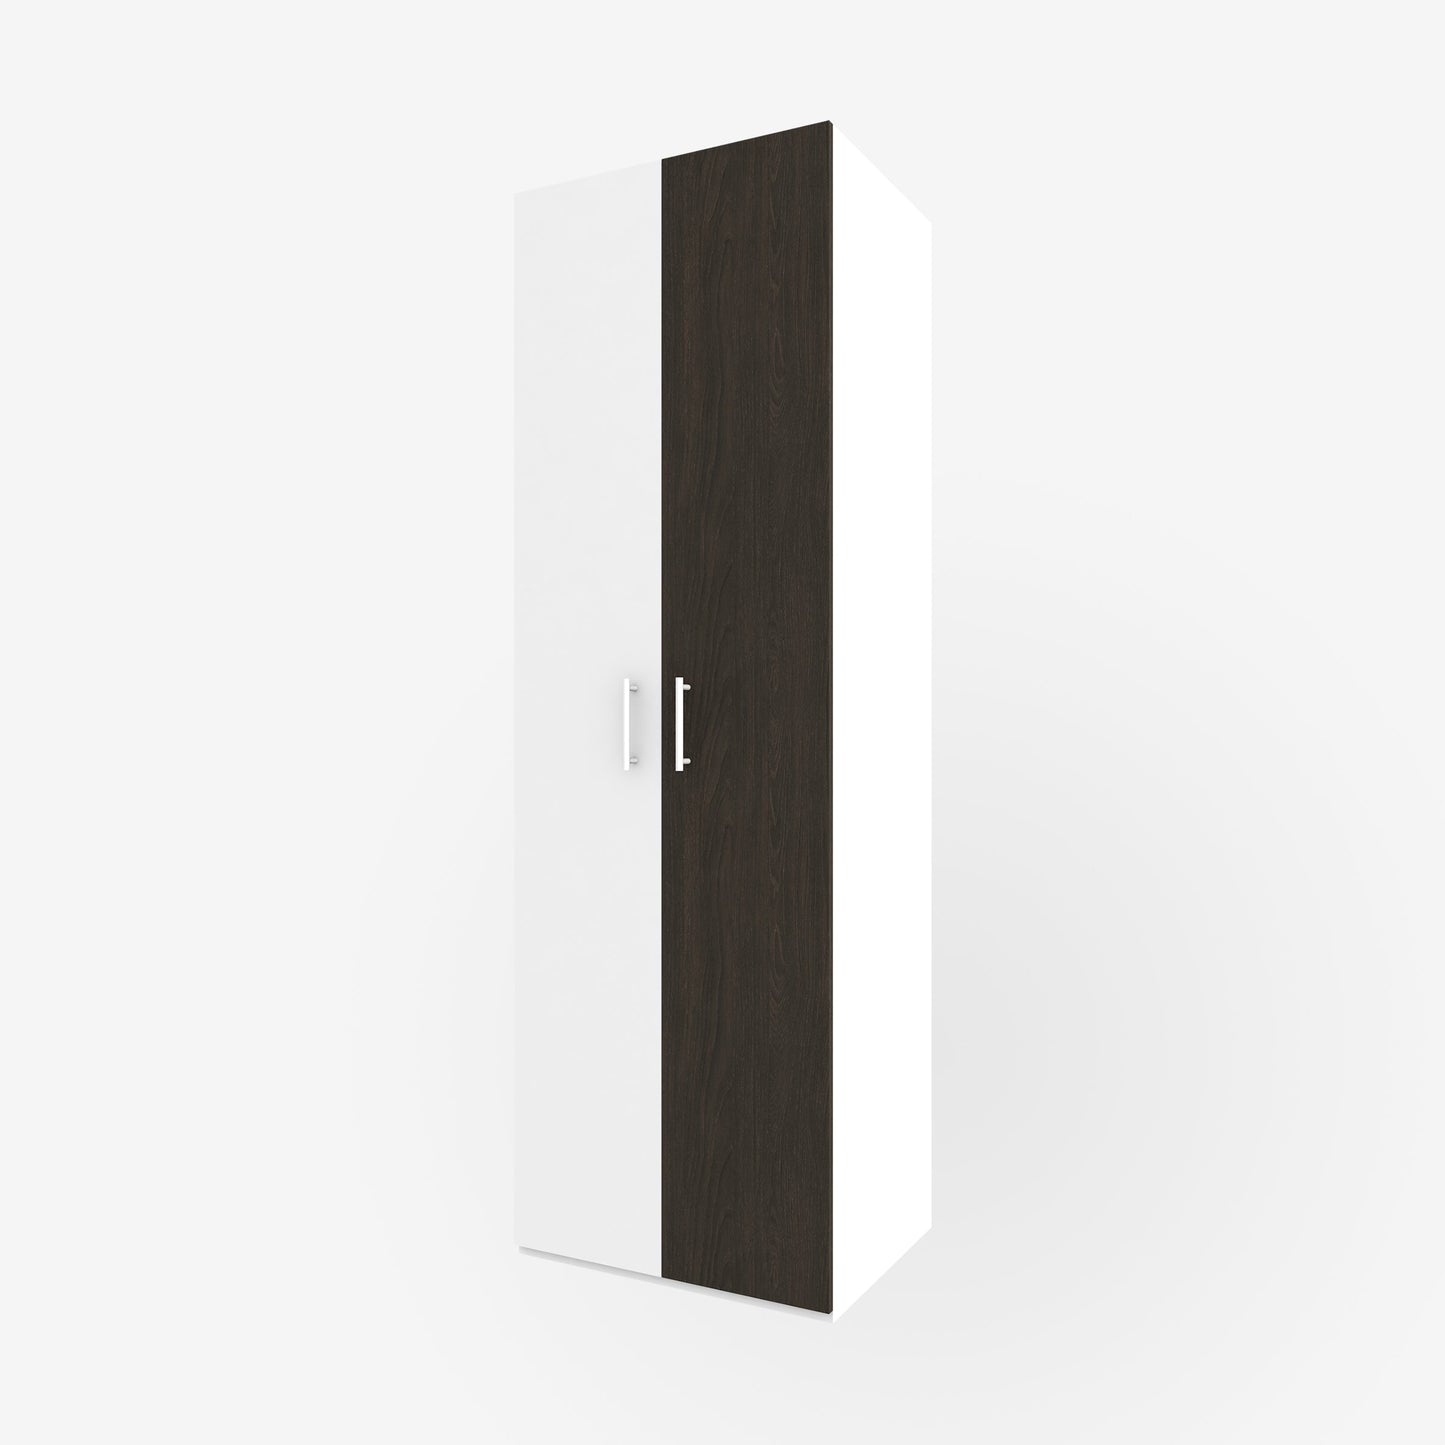 15" x 93" Dark wood tone westwood slab door for Ikea or Swedeboxx pax closet cabinet